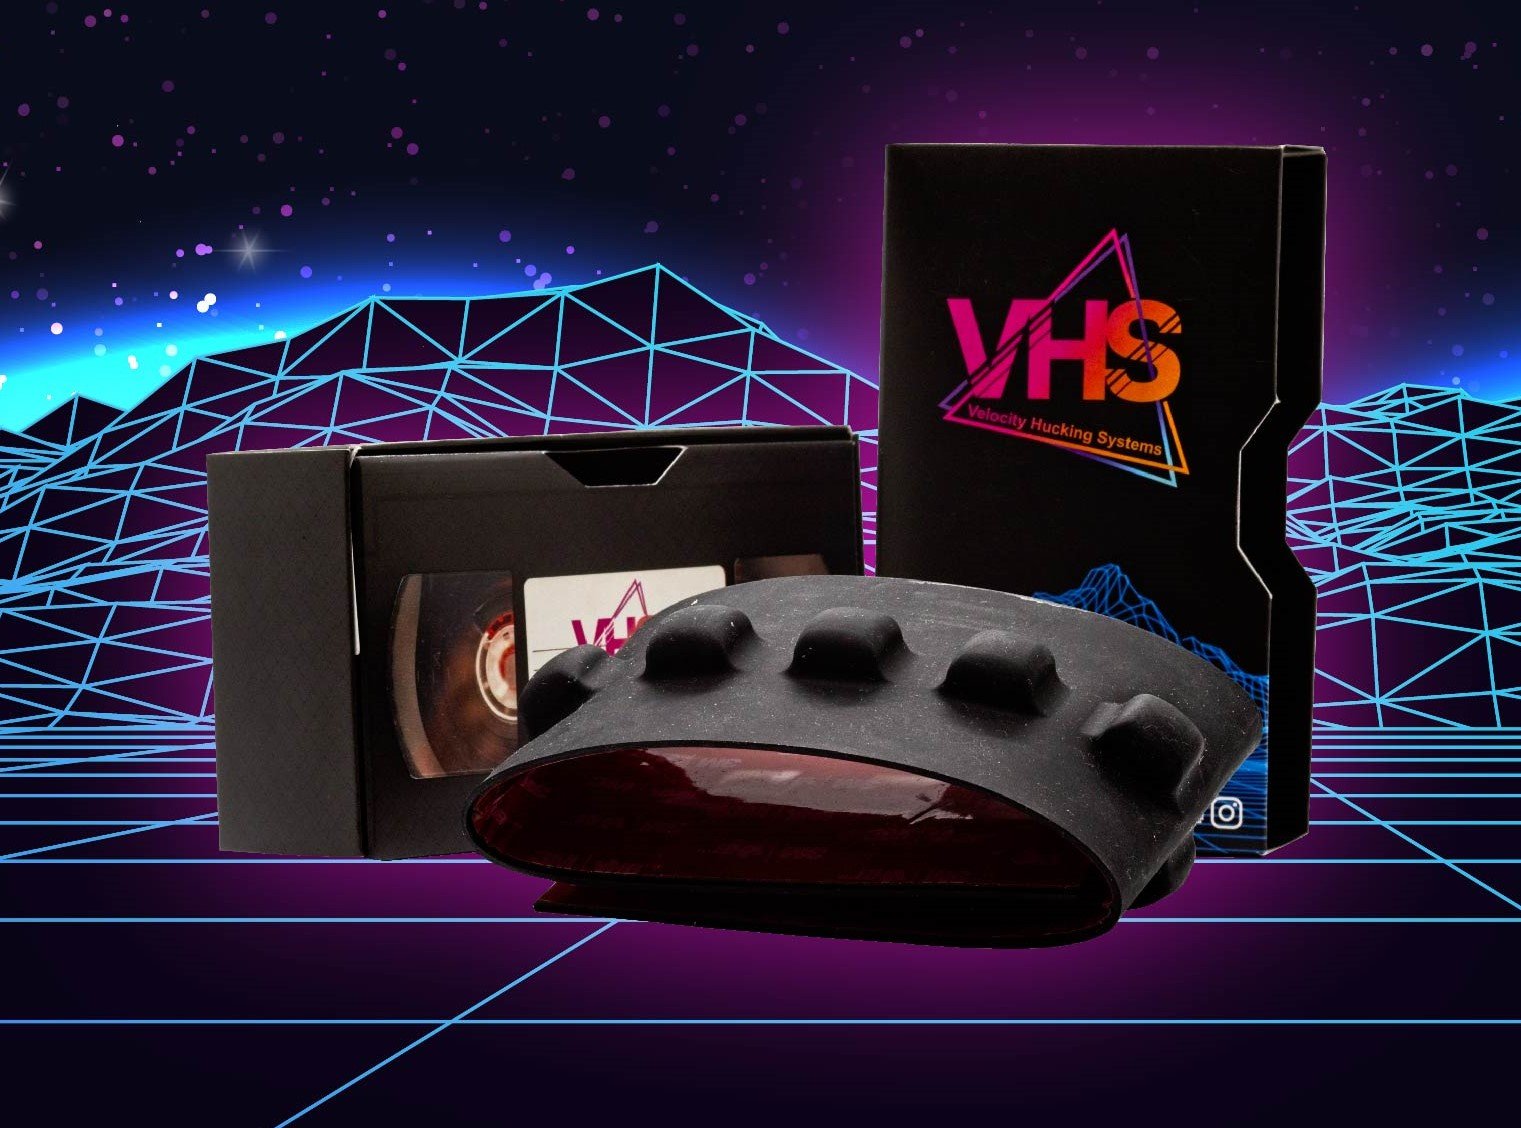 VHS Tape 2.0